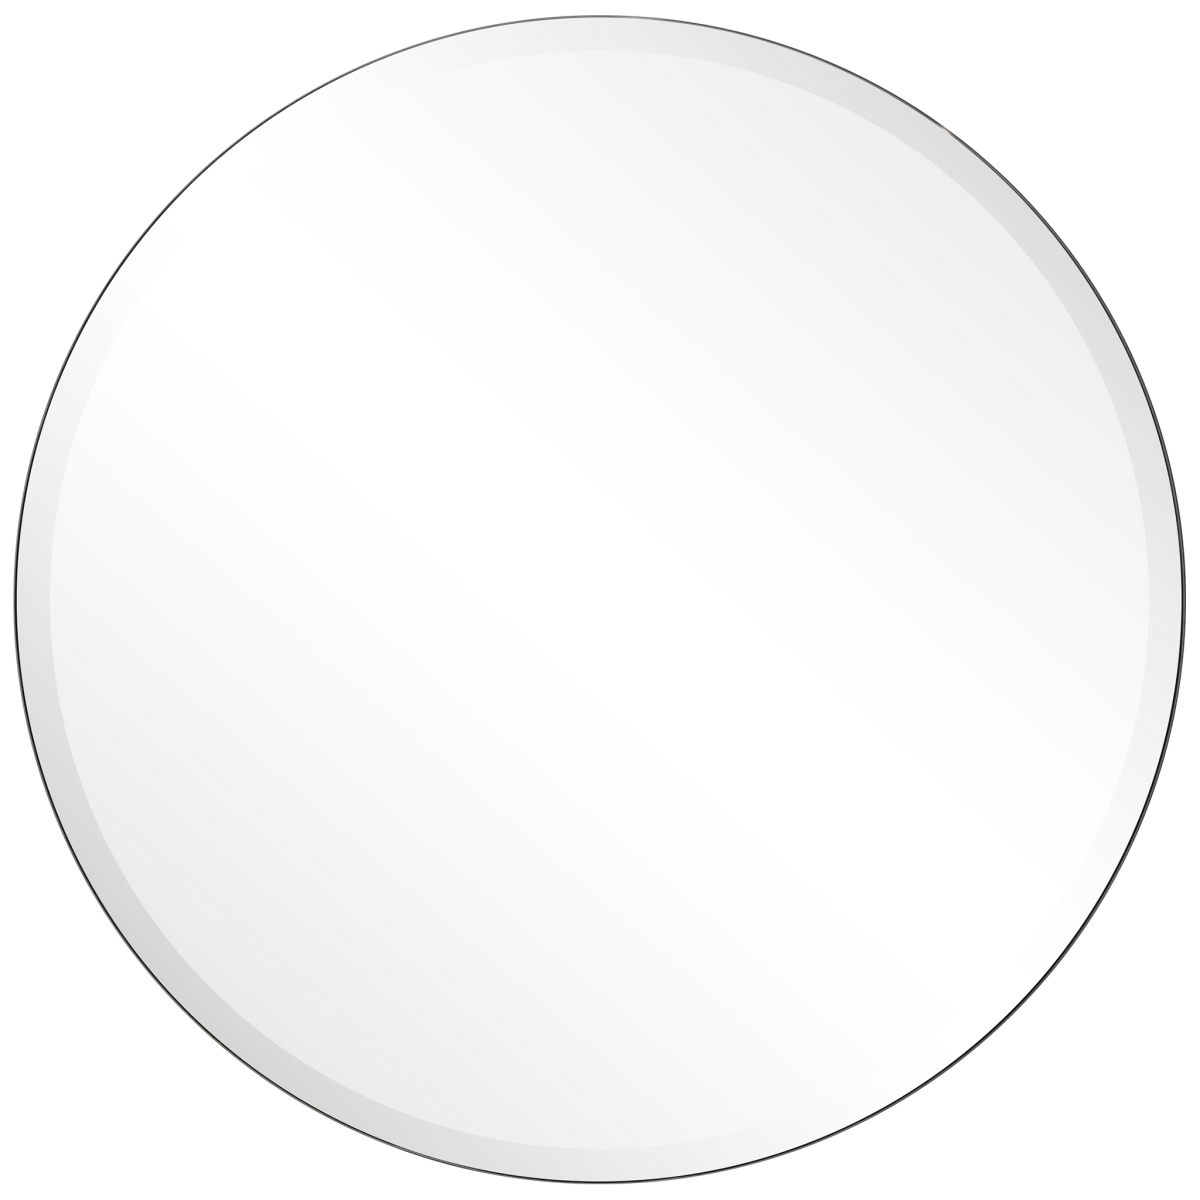 Flm-10030-3030 30 X 30 In. Frameless Beveled Round Wall Mirror - 1 In. Beveled Edge